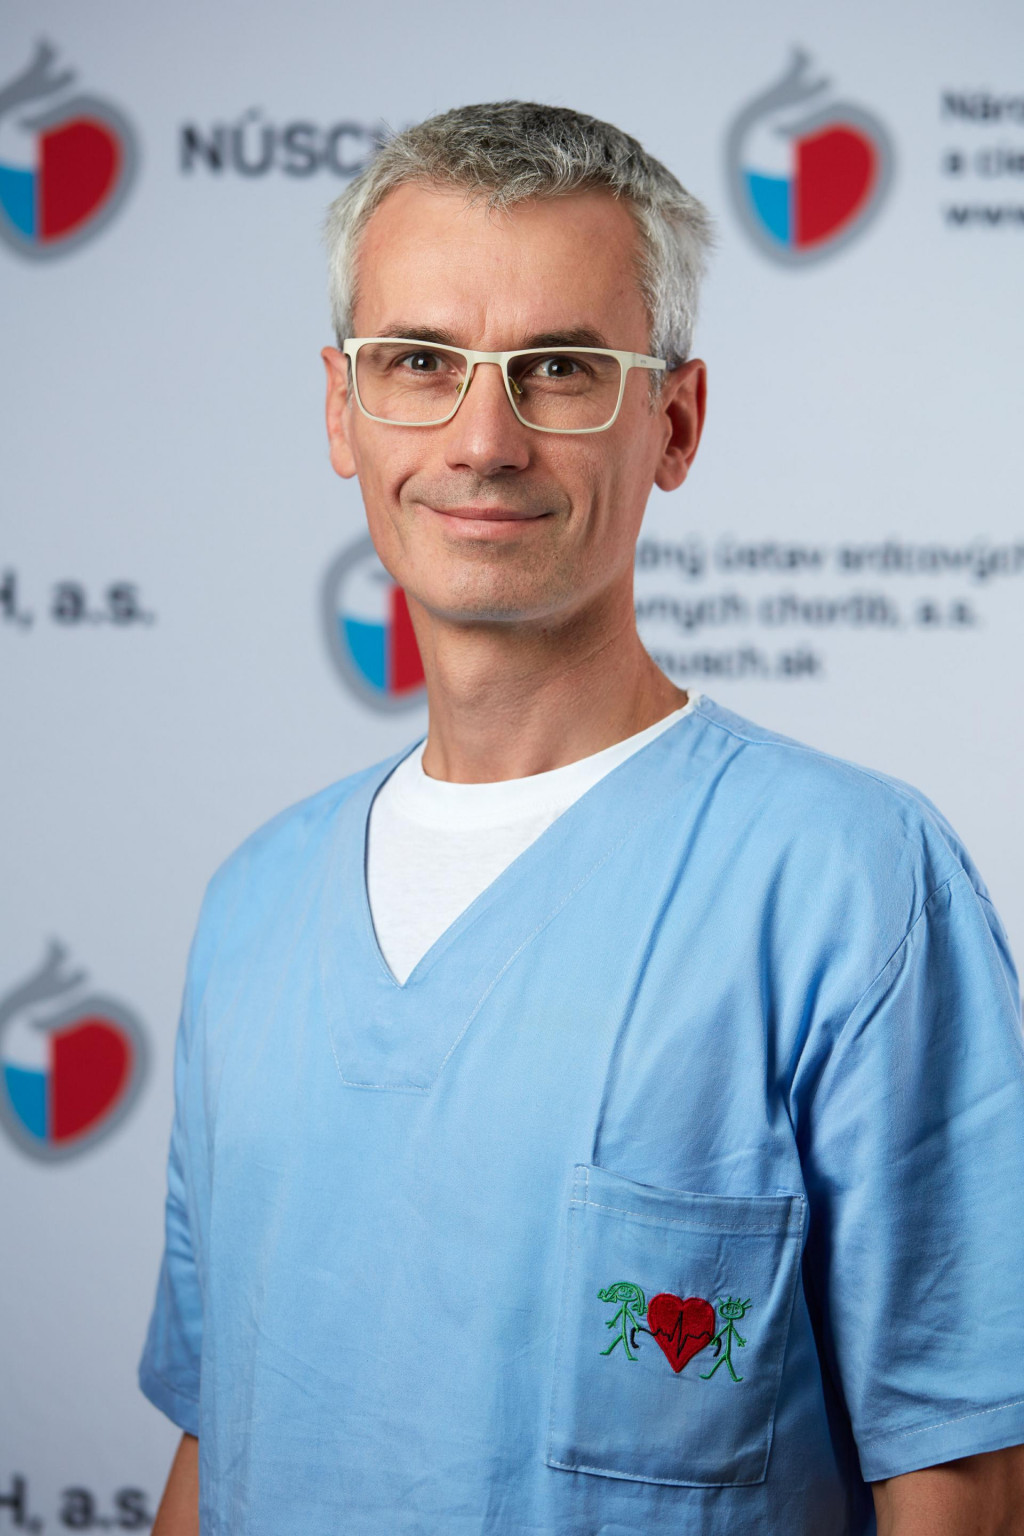 MUDr. Martin Záhorec, PhD, Detské kardiocentrum, NÚSCH Bratislava